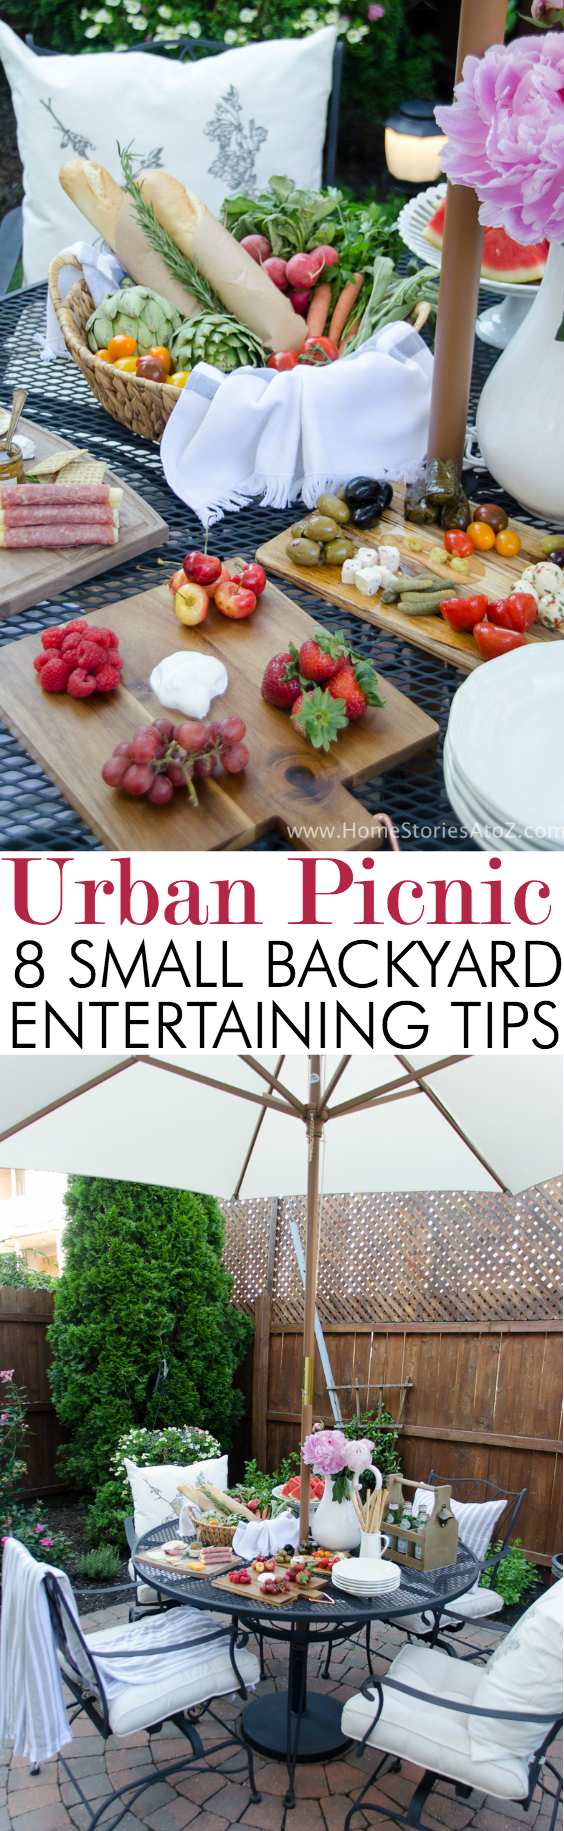 Urban picnic small backyard entertaining tips